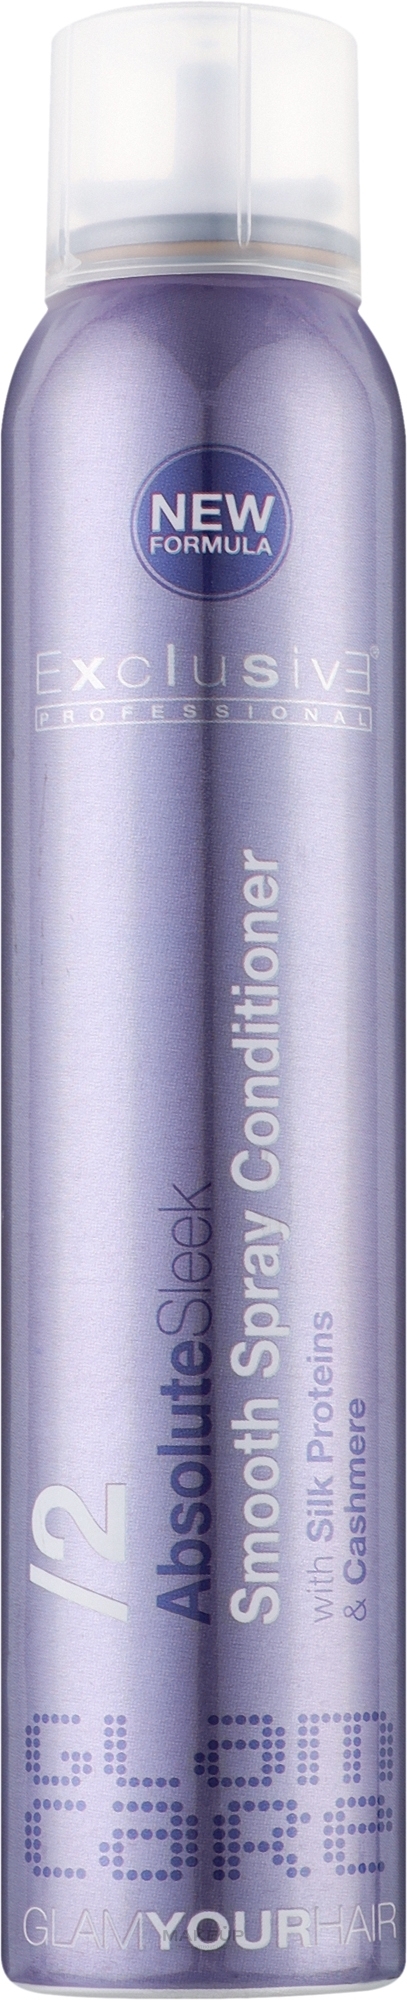 Спрей-кондиционер для гладкости волос - Exclusive Professional Absolute Sleek Smooth Spray Conditioner No. 2 — фото 200ml